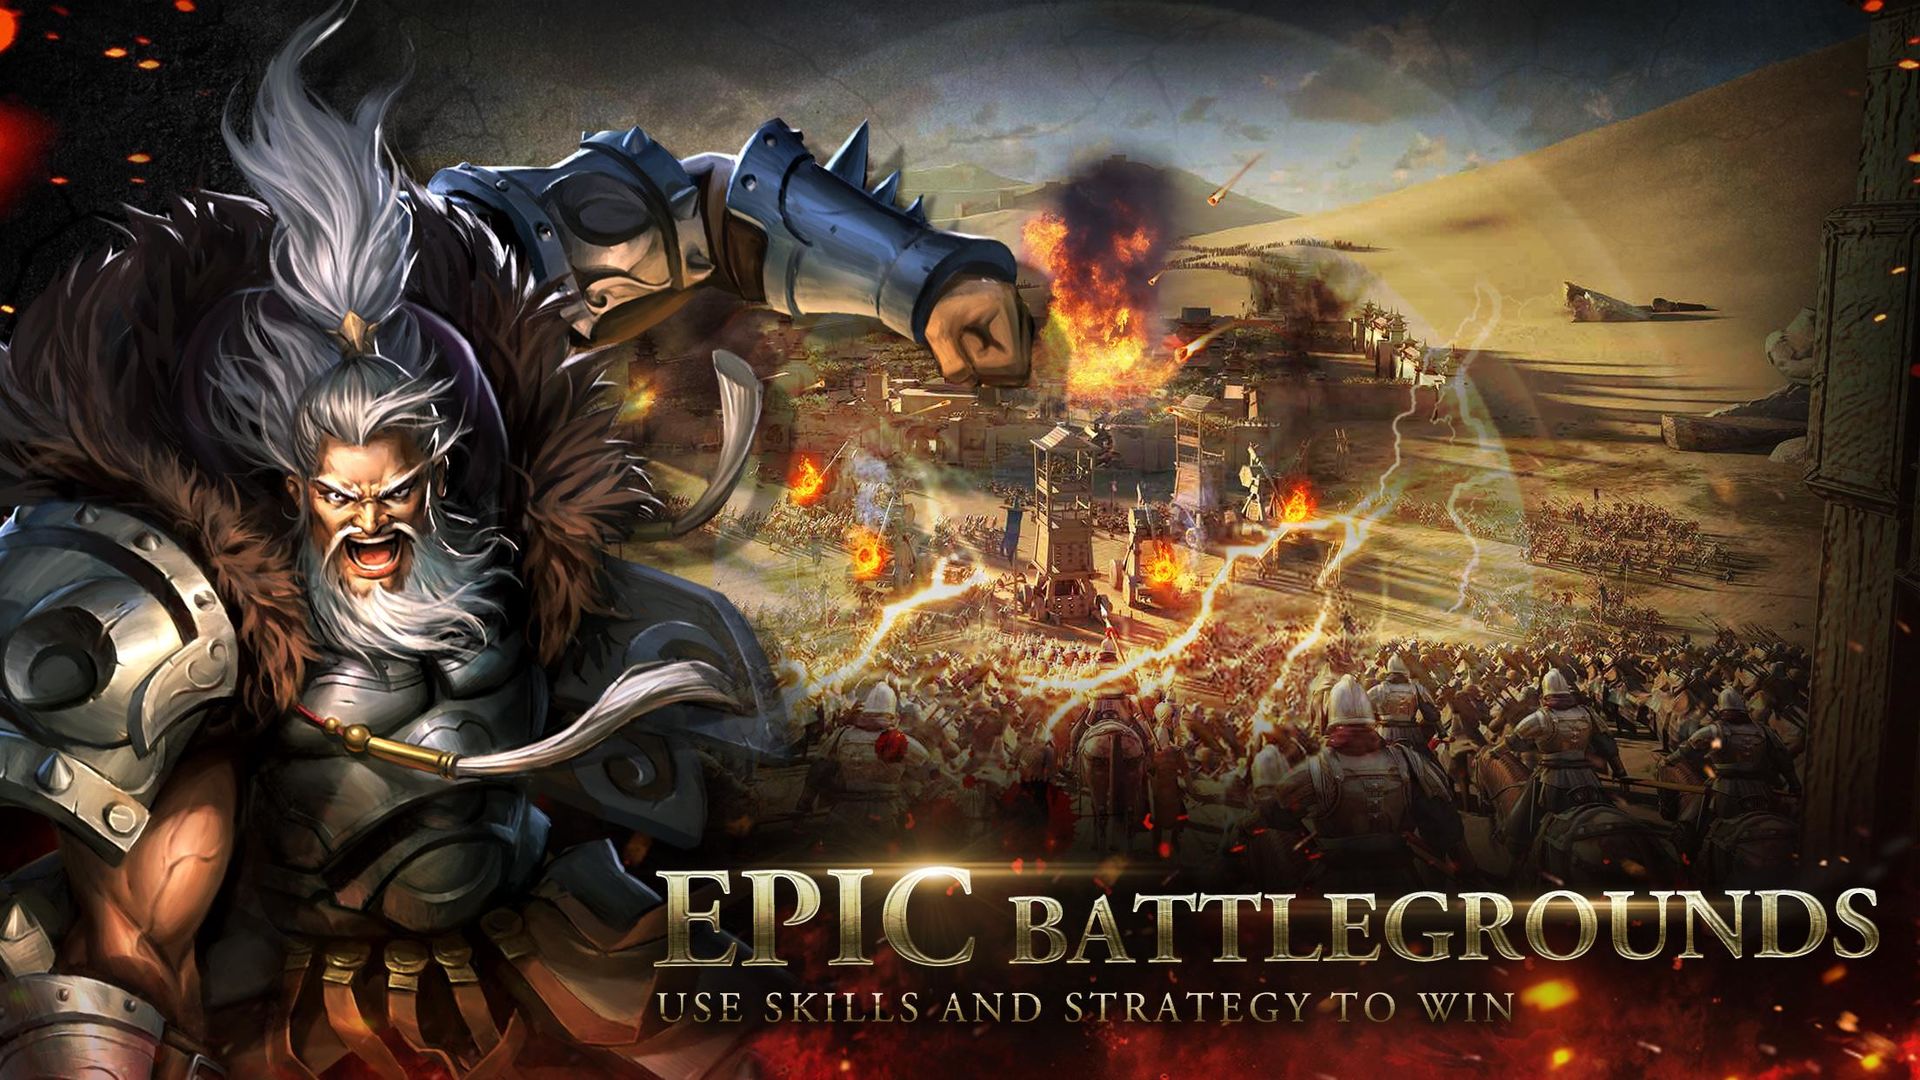 Screenshot of Three Kingdoms: Epic War